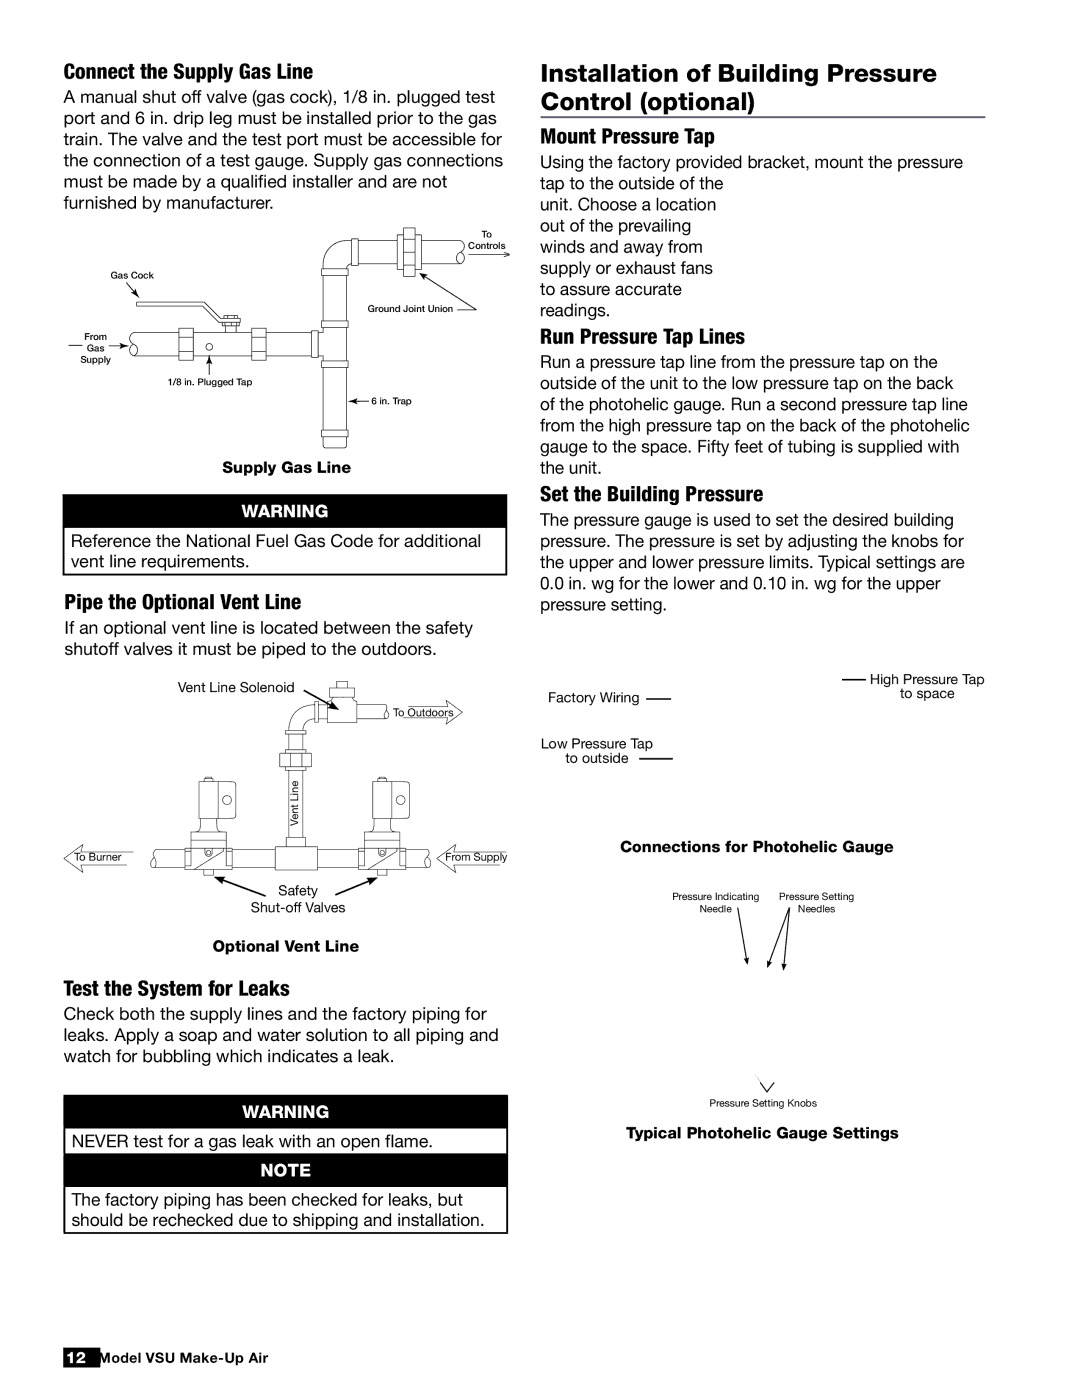 Greenheck Fan 470654 manual Installation of Building Pressure Control optional 